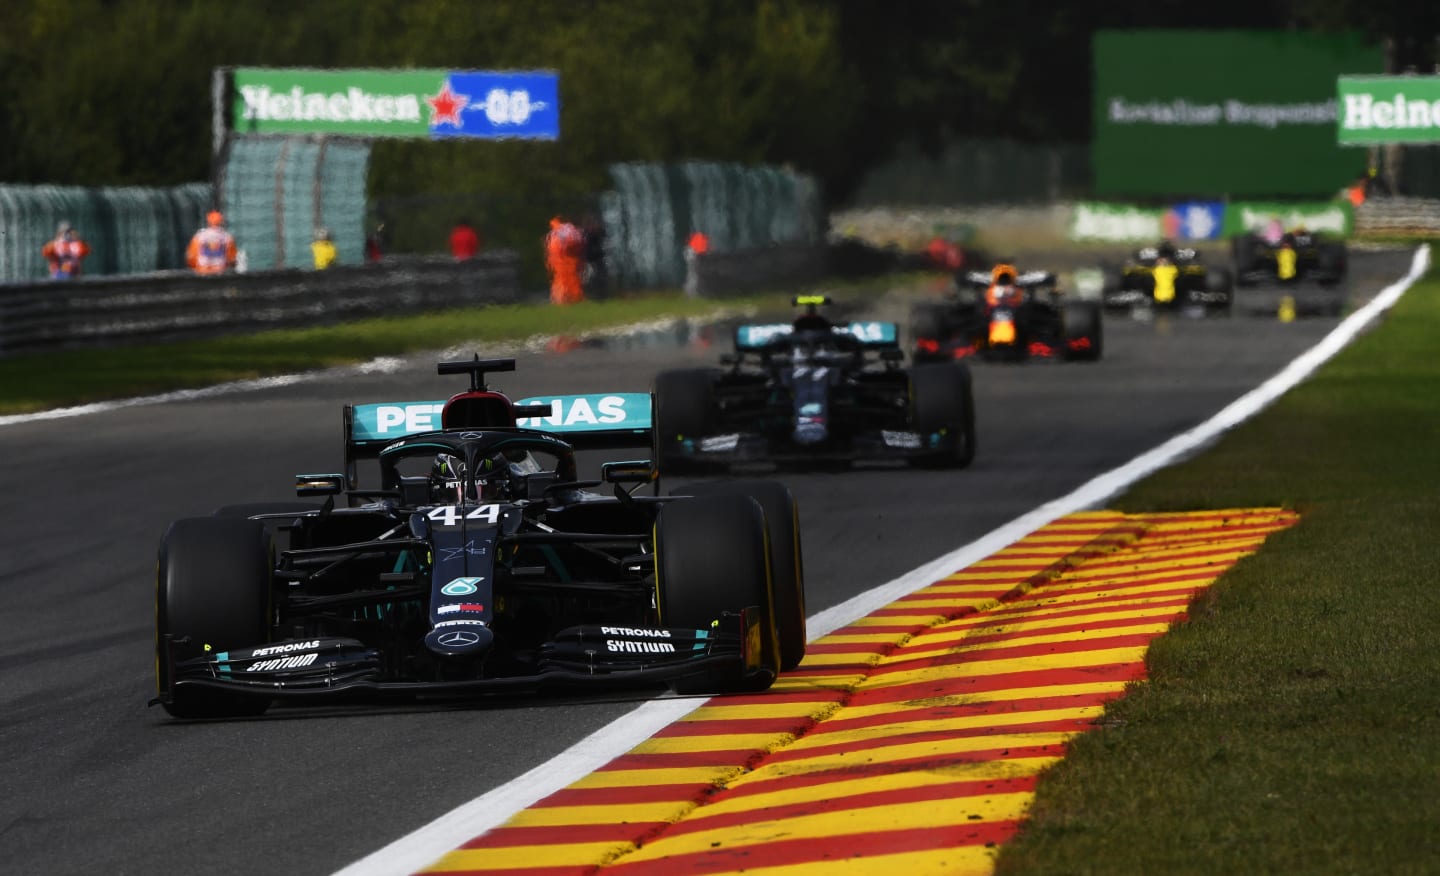 SPA, BELGIUM - AUGUST 30: Lewis Hamilton of Great Britain driving the (44) Mercedes AMG Petronas F1